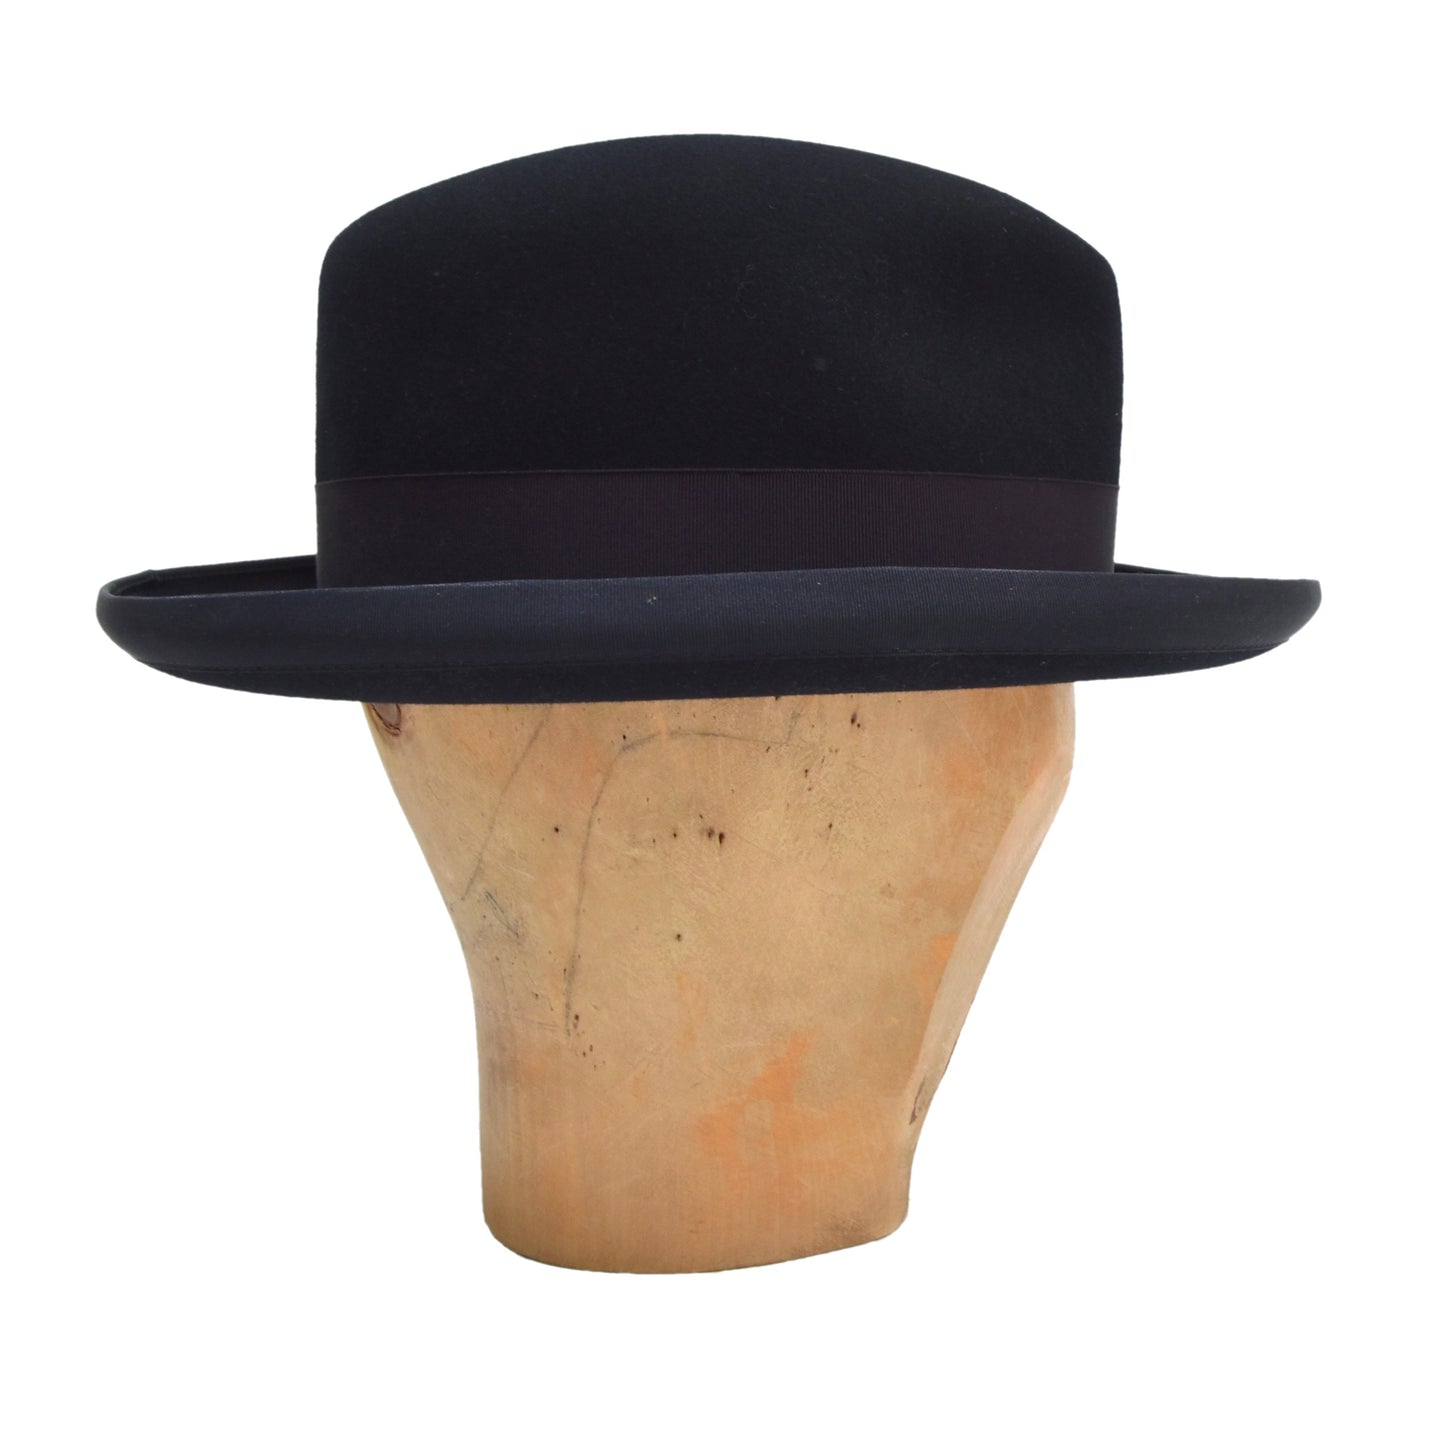 Vintage Preis Hut Homburg Hat Size 57 - Midnight Blue or Black